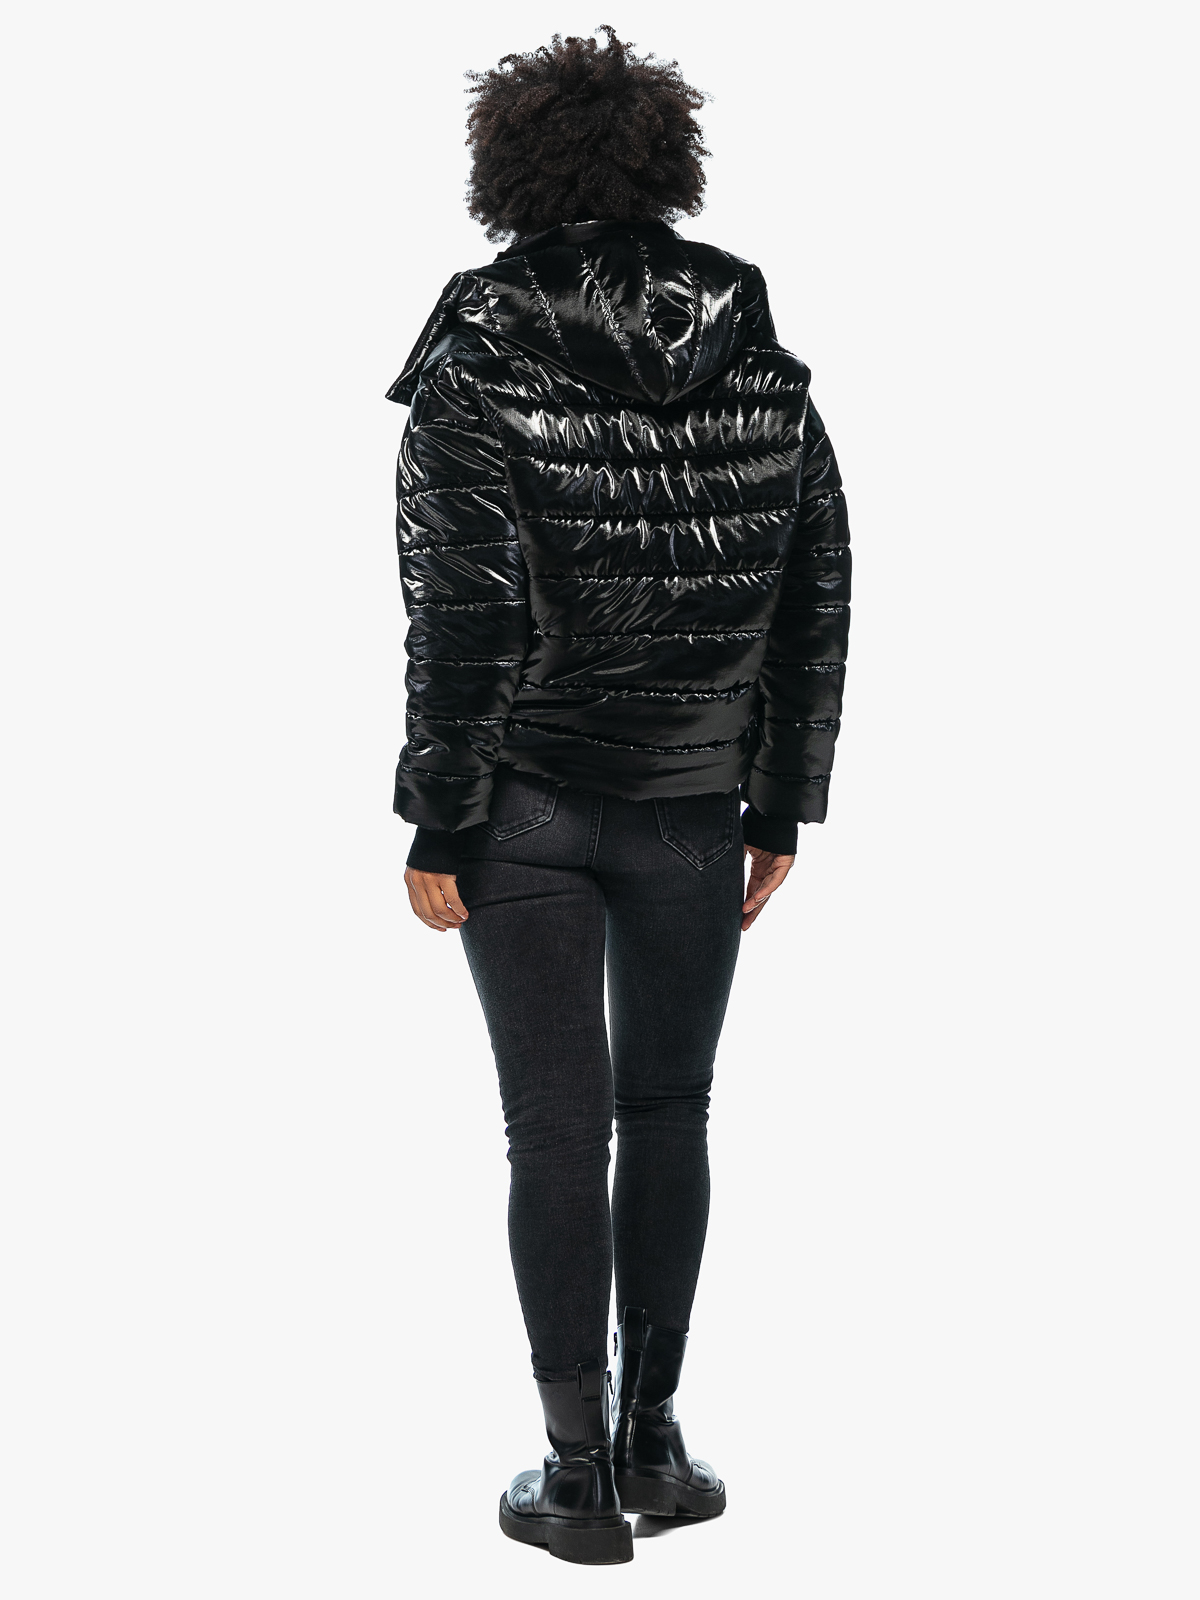 Куртка женская стеганая Michelle черная блестящая | Фото №14